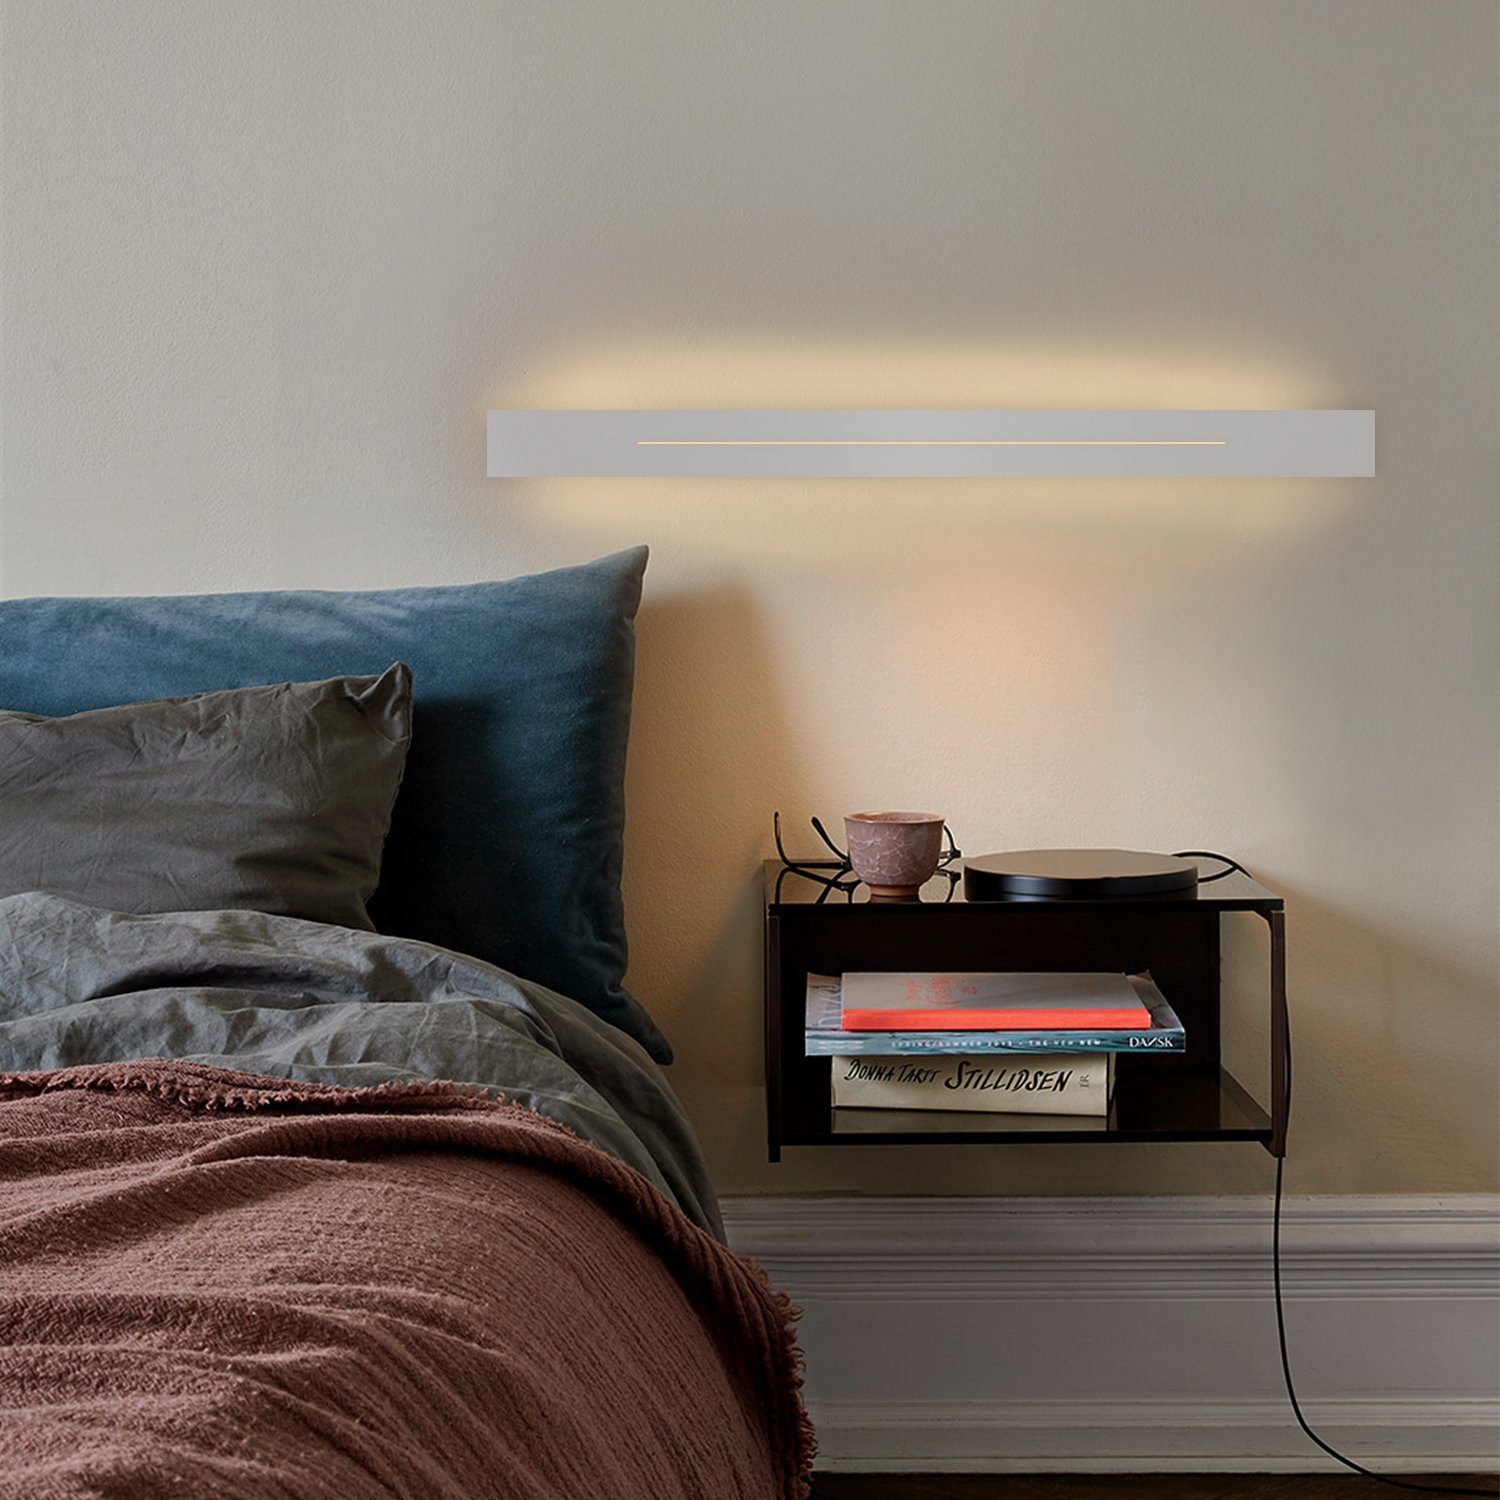 LED LED ZMH fest innen 60cm warmweiß, Wandleuchte 100cm, Wandlampe 60cm weiß/schwarz integriert, Weiß 30cm